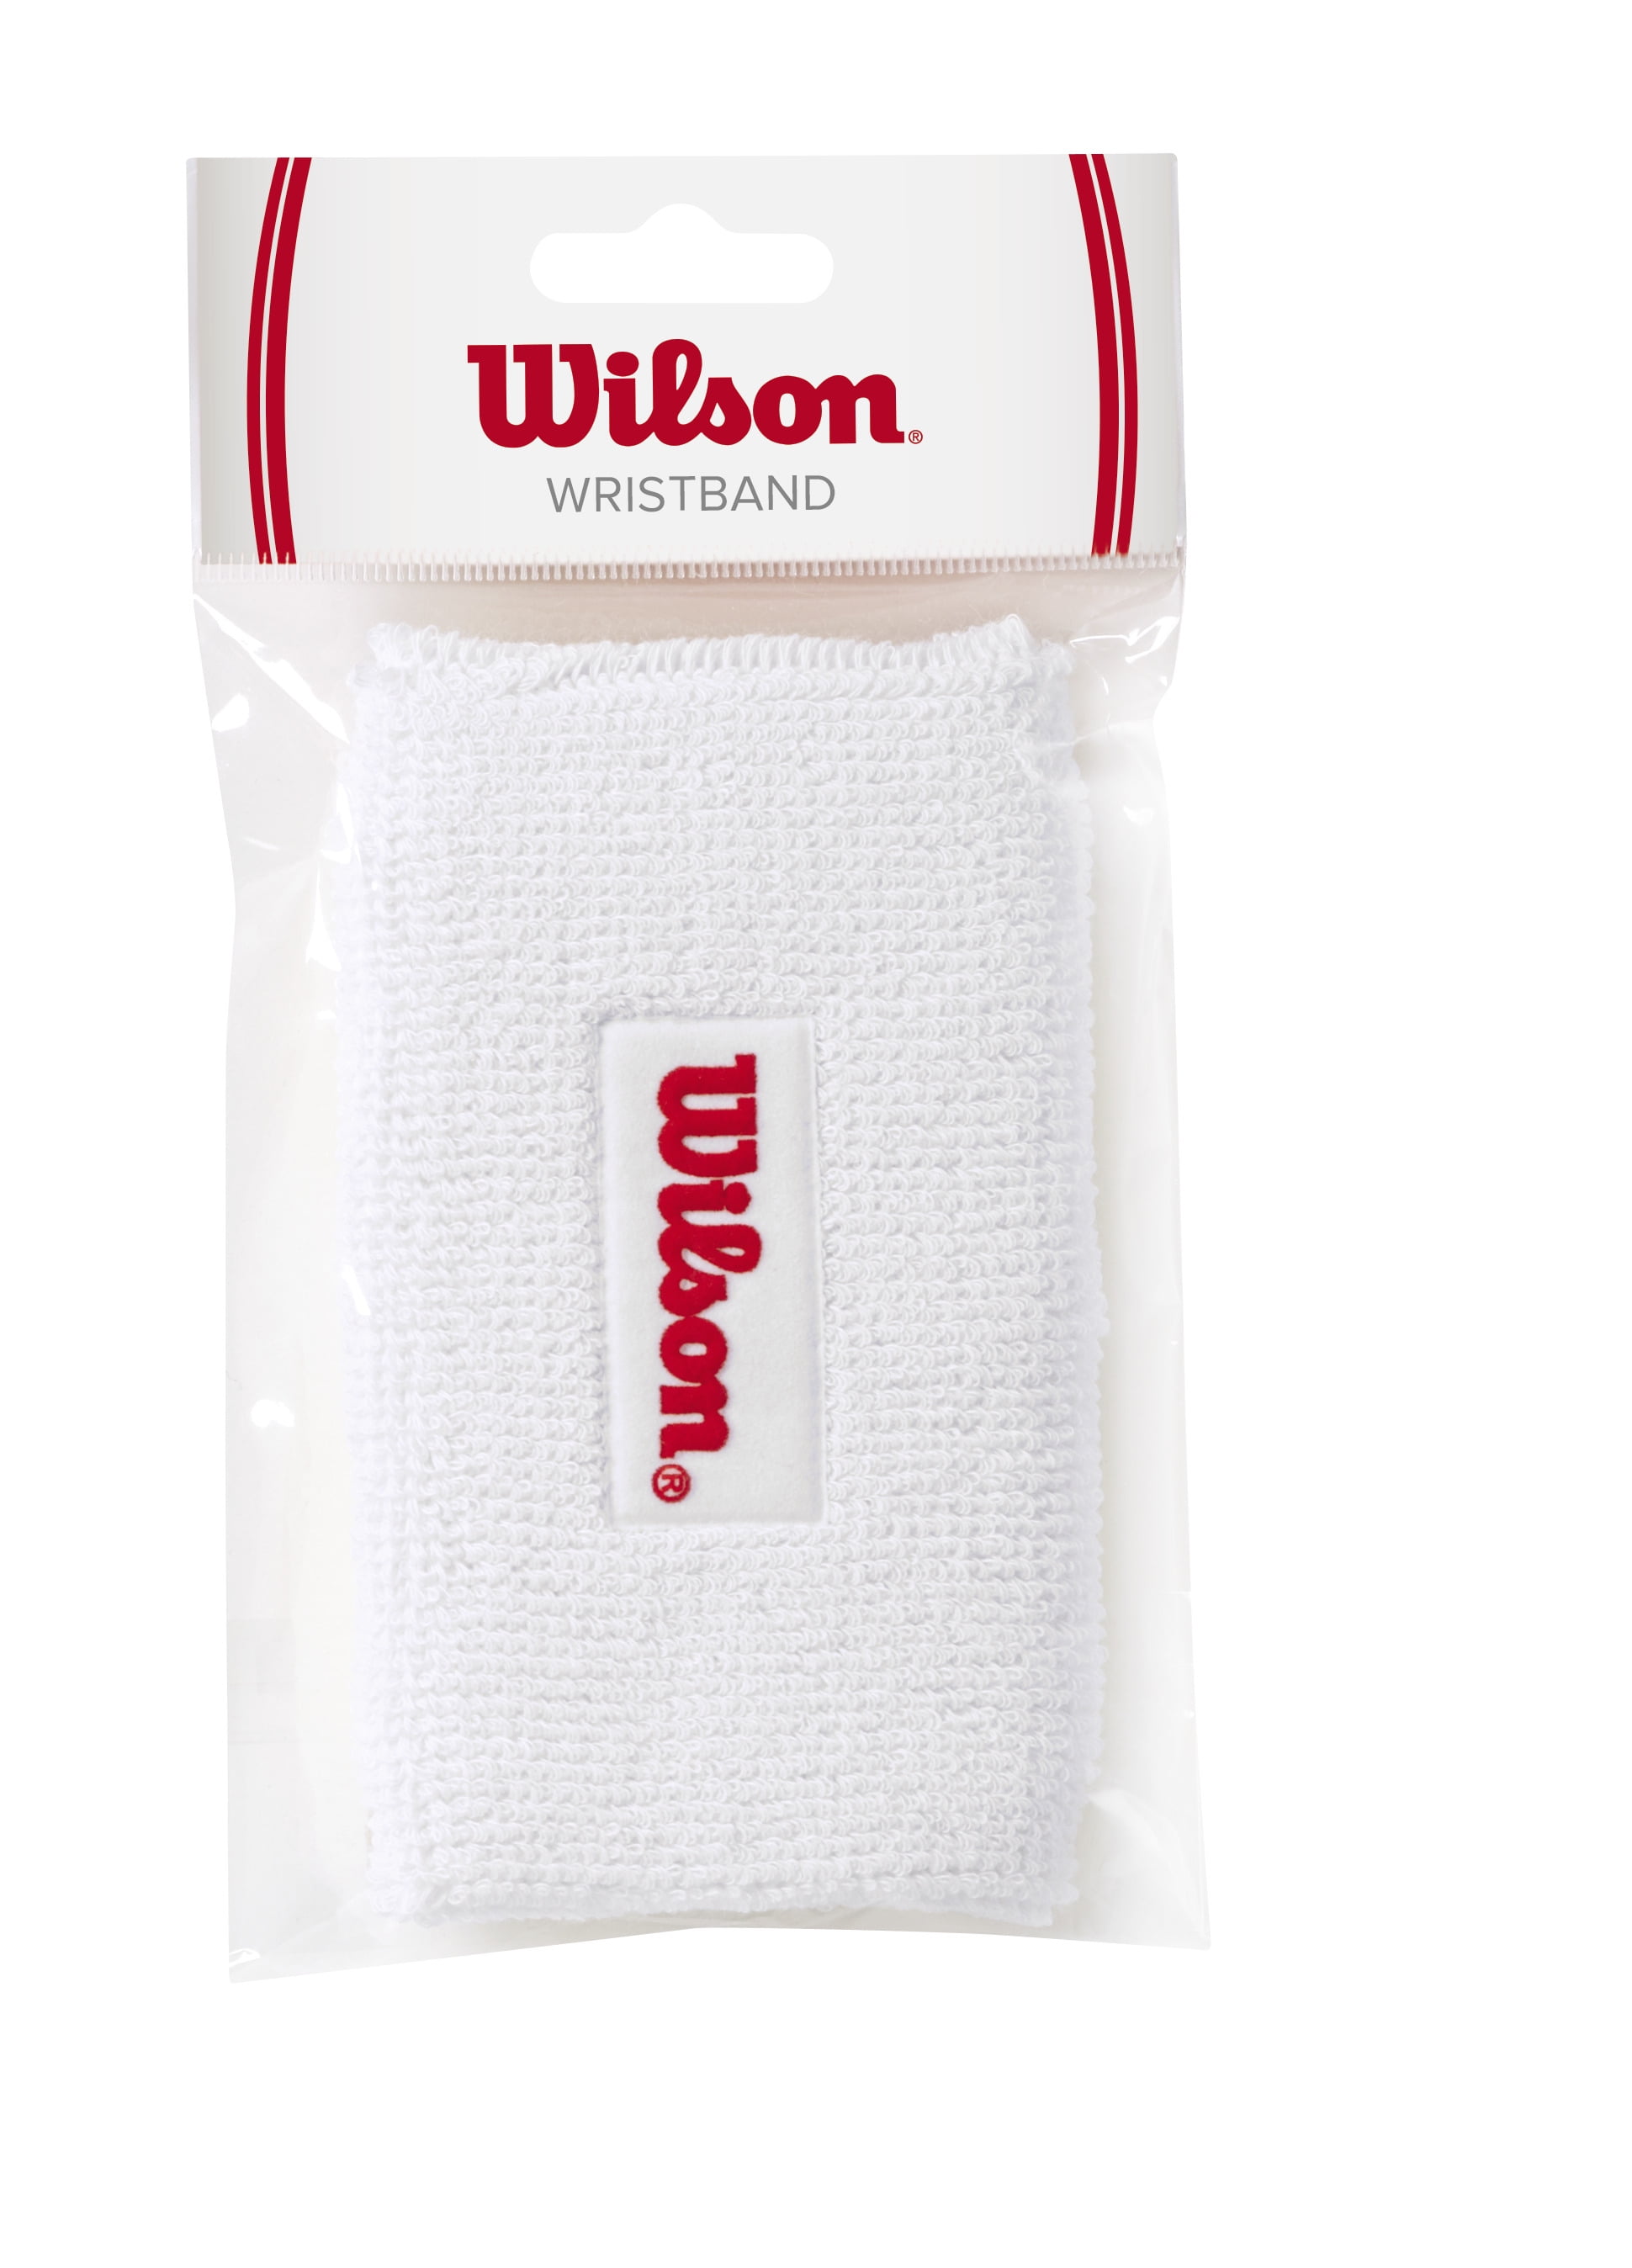 Wilson Premium Sweatband SET 2 Wrist Bands + 1 Headband Sports Tennis Hairband 